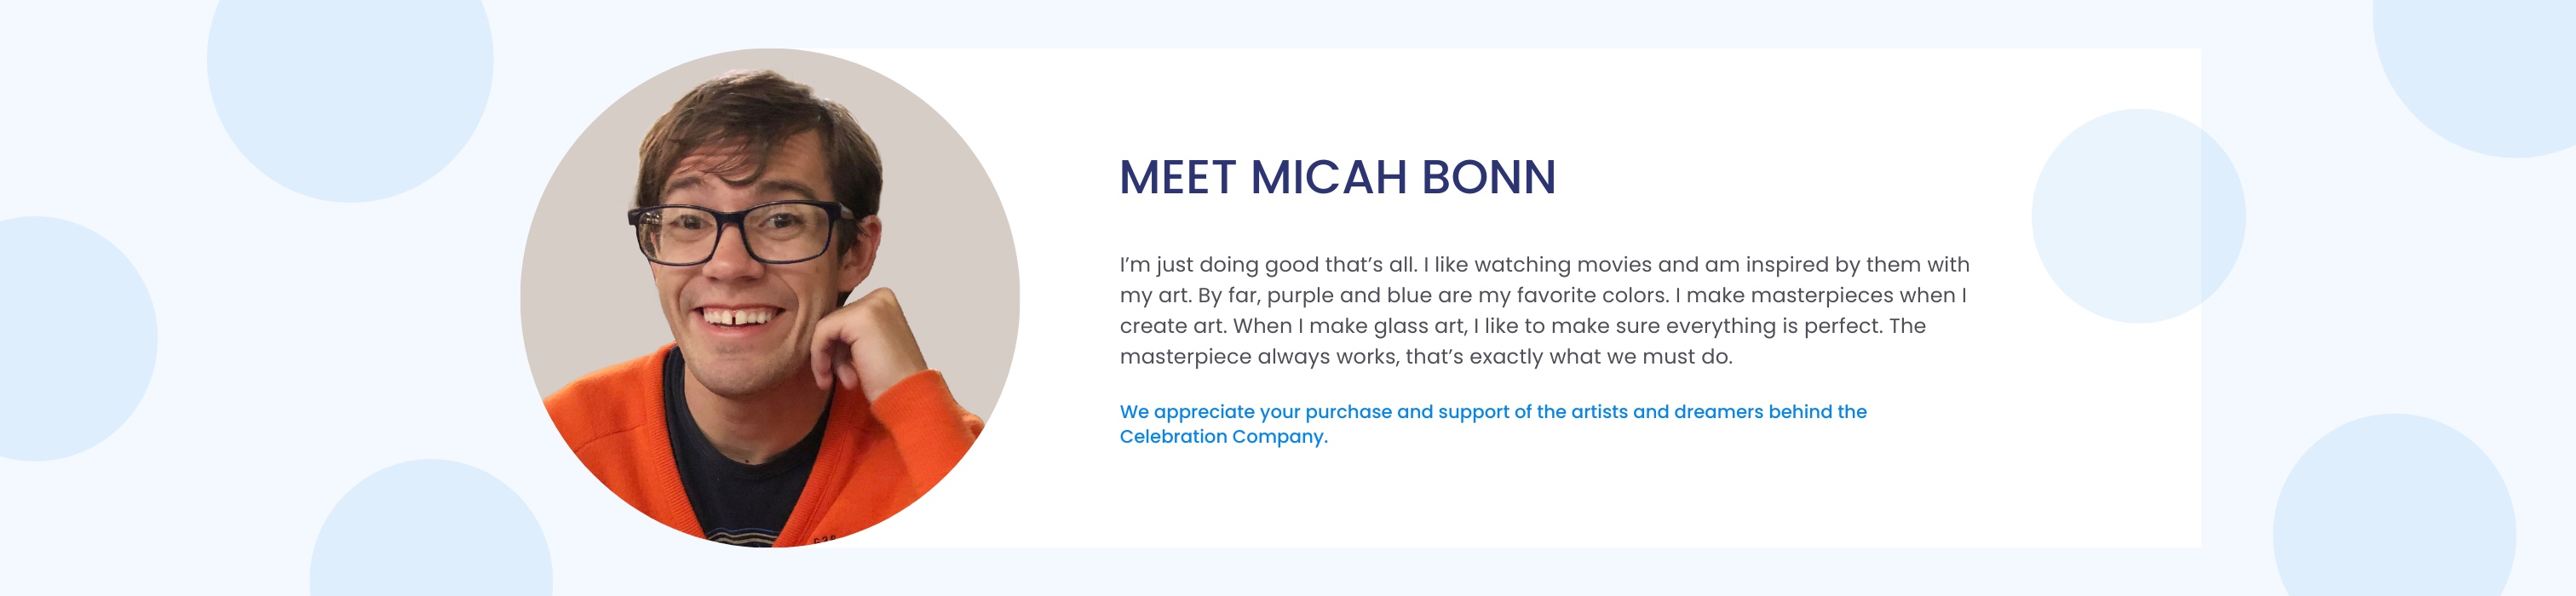 Meet MICAH BONN